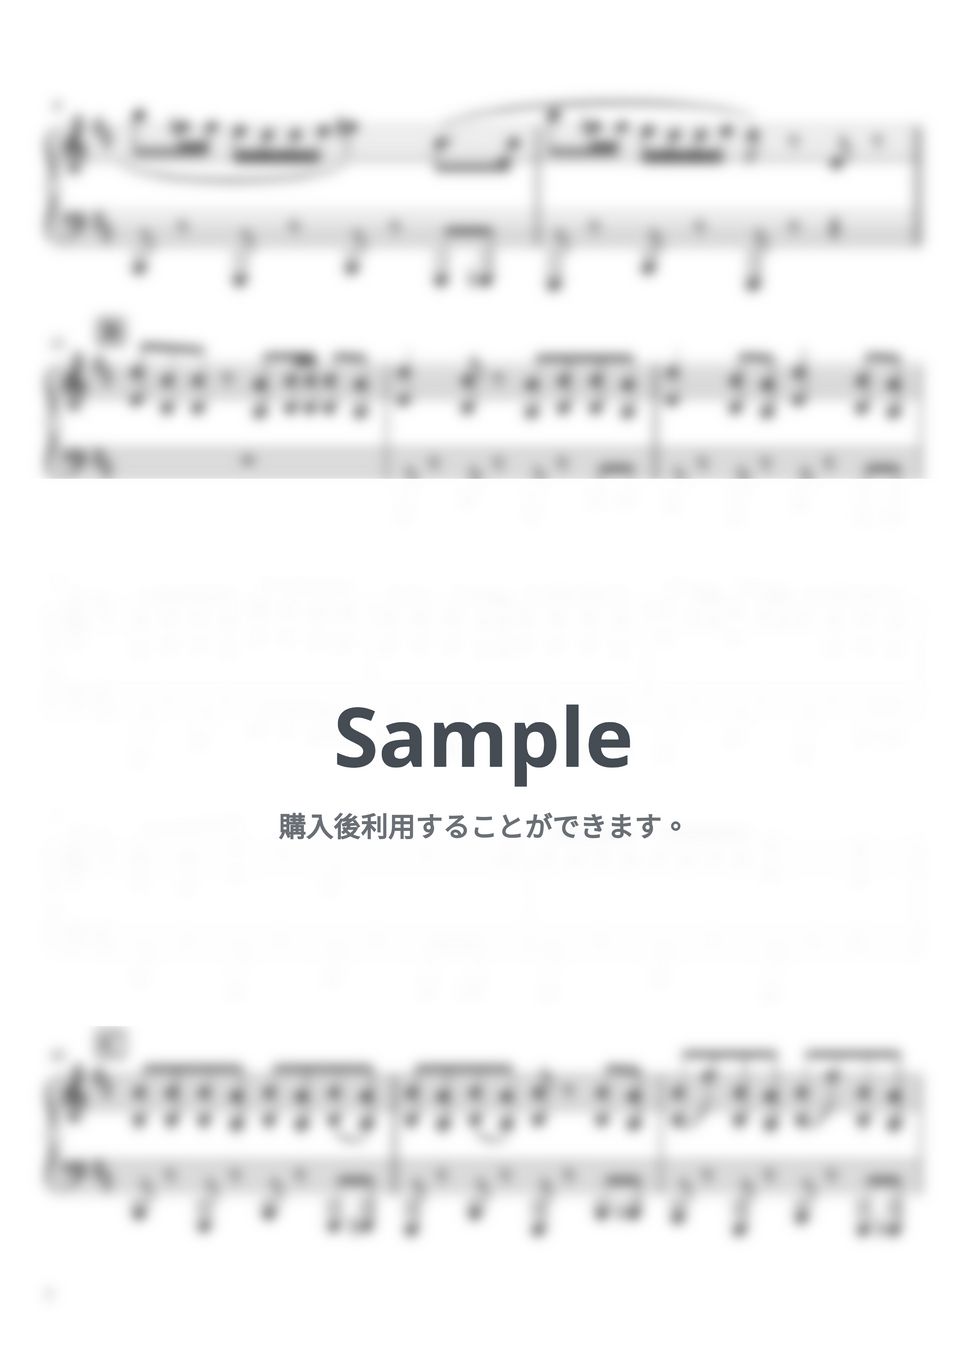 meiyo - なにやってもうまくいかない (ピアノソロ / 中級～上級) by SuperMomoFactory